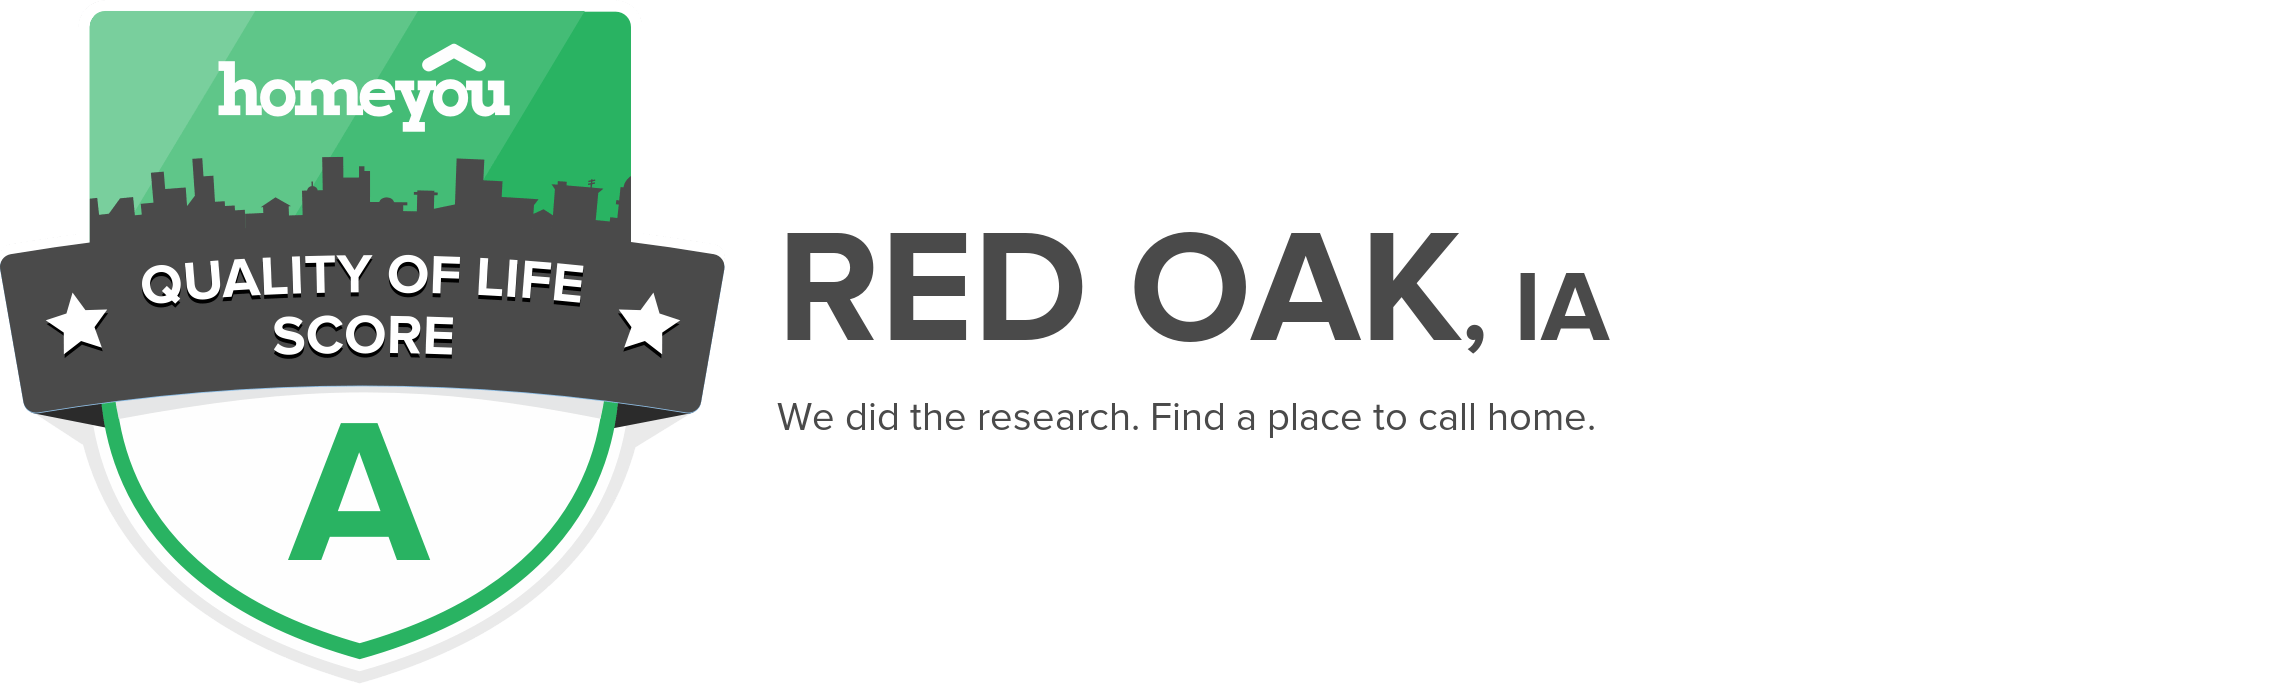 Red Oak, IA